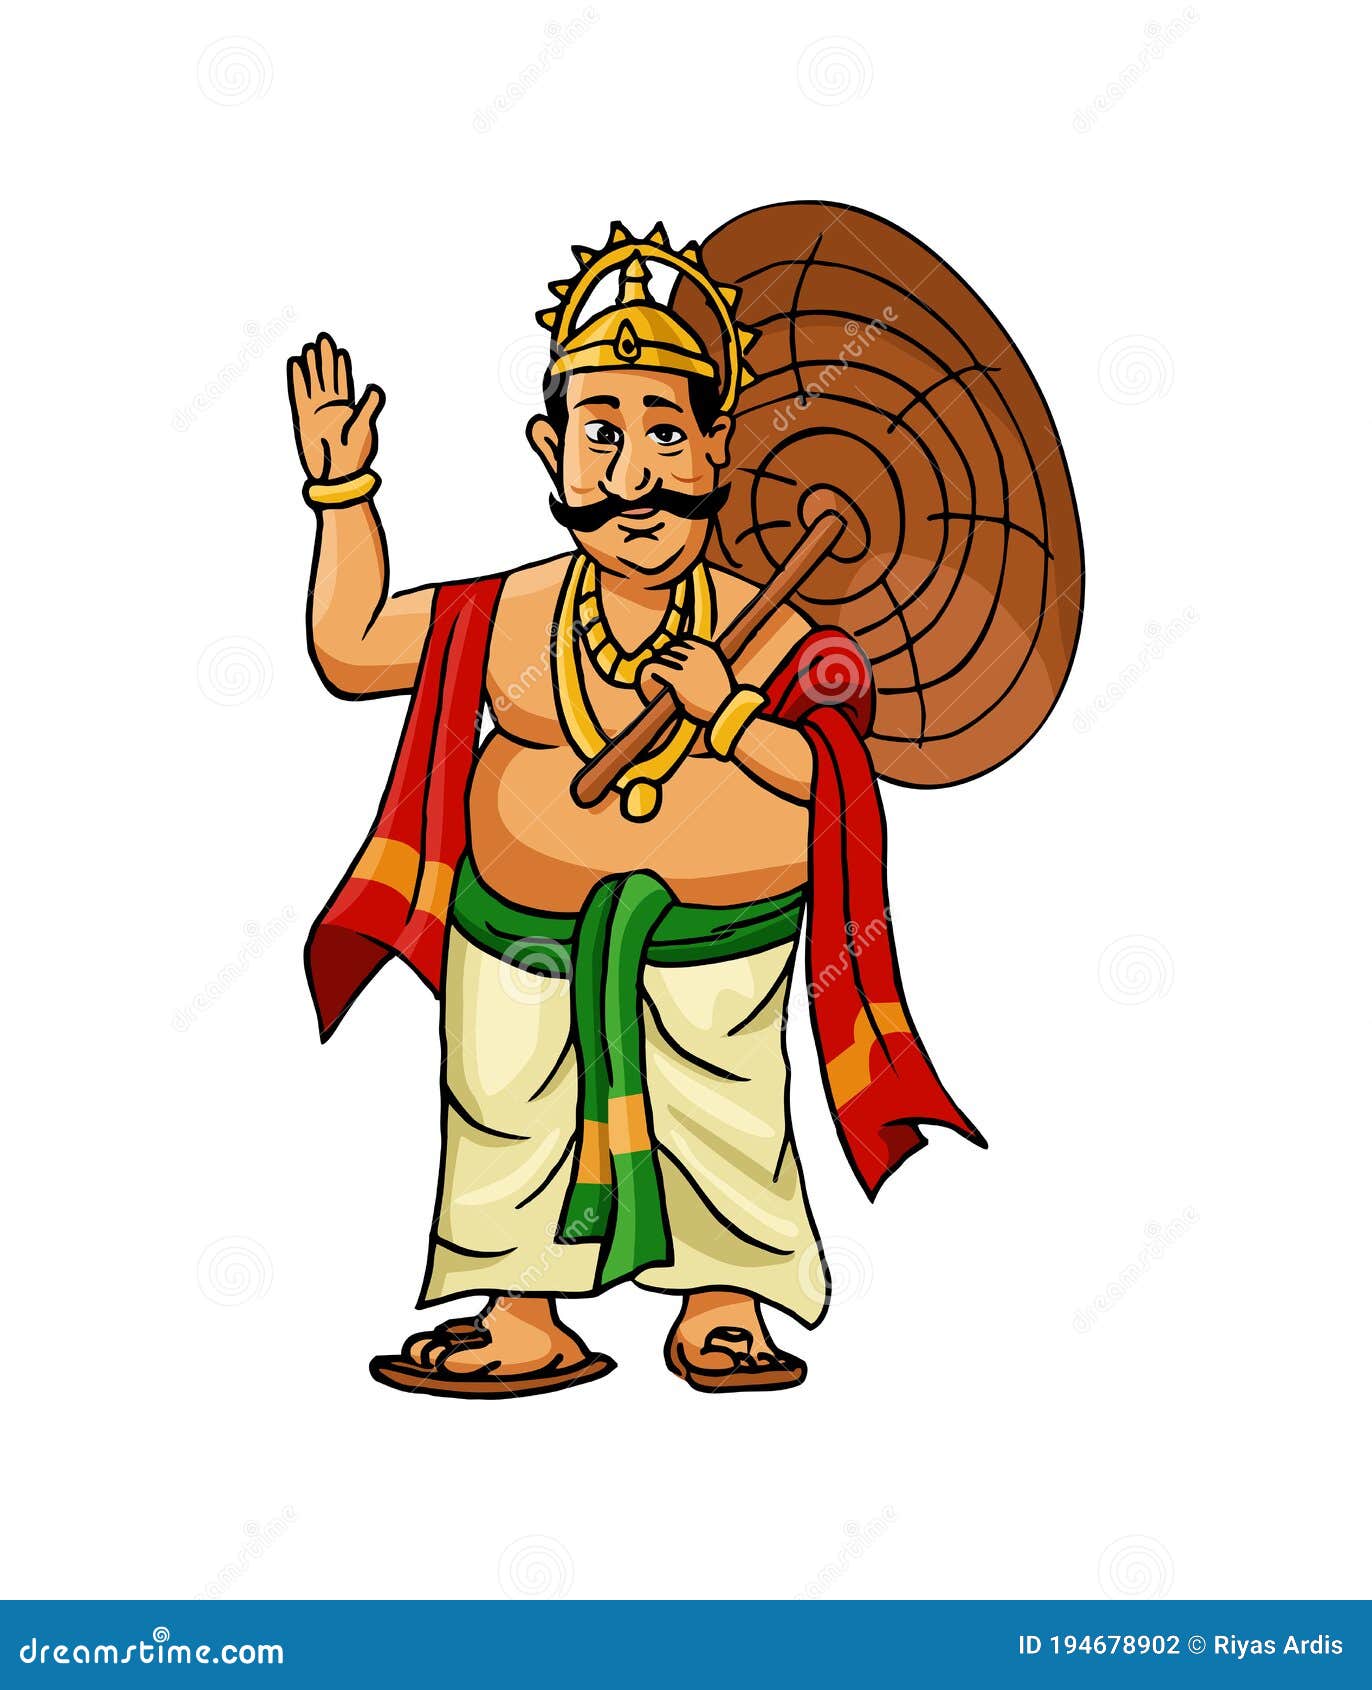 Mahabali reimagined, sans pot belly | Latest News | The Hindu